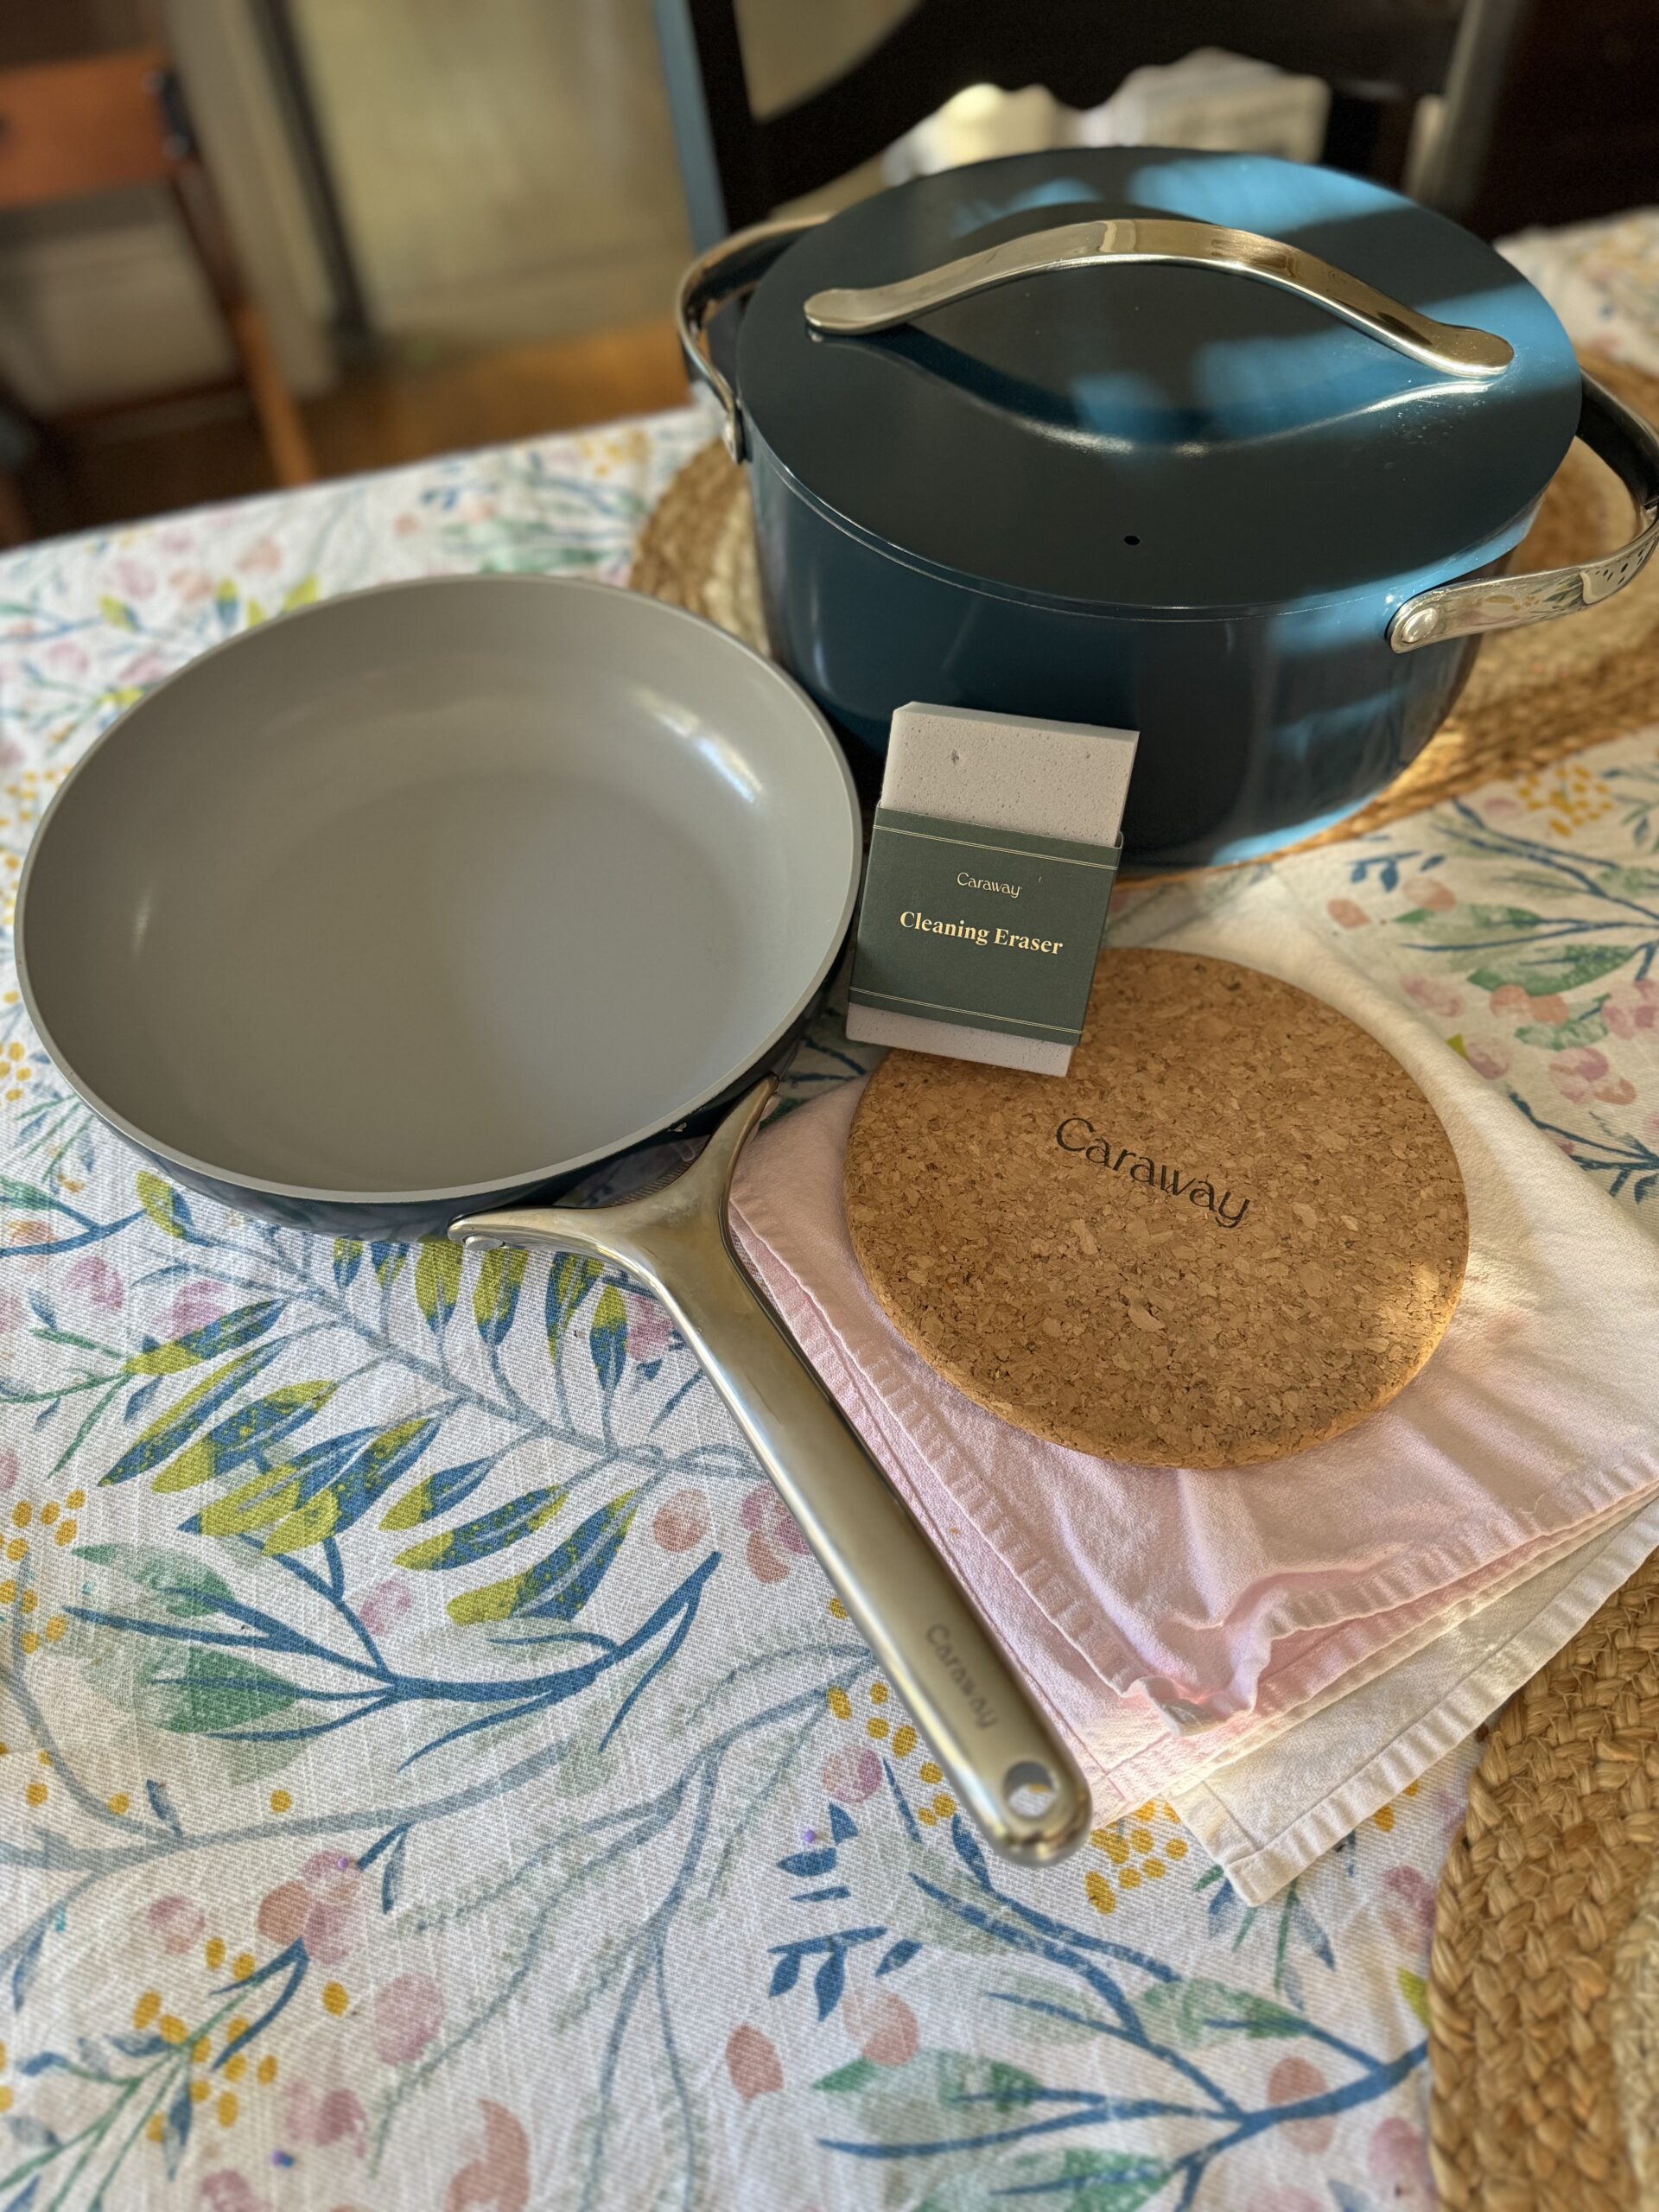 5 Pcs Copper Bakeware Set - Organic Eco Friendly Nonstick Coating